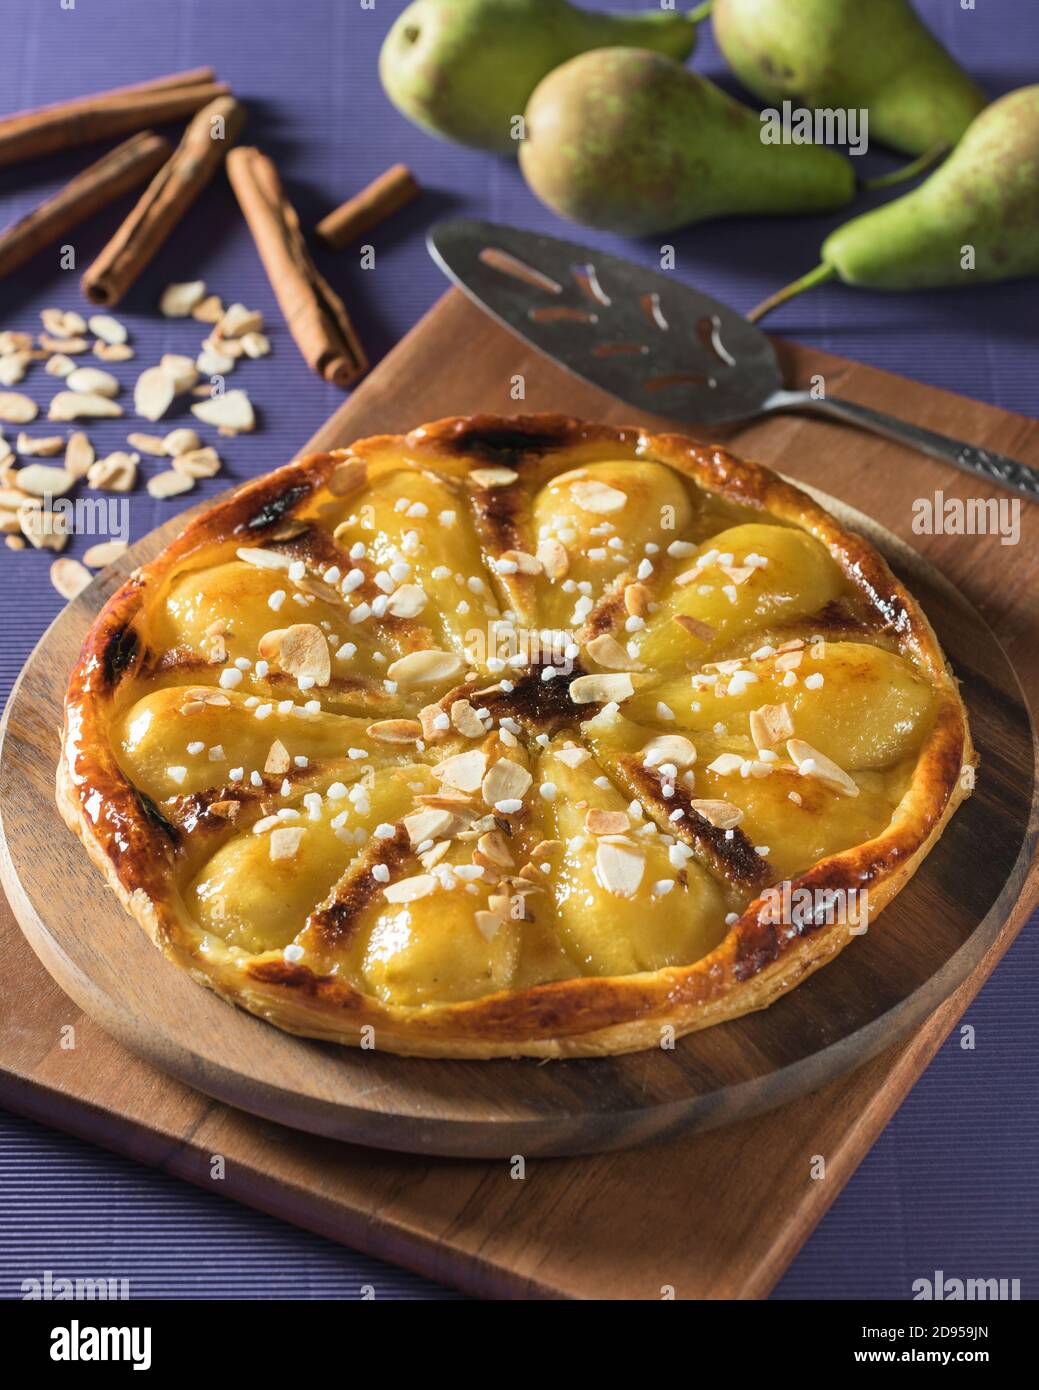 Pear and almond tart. Tarte aux poires amandine. Food France Stock Photo